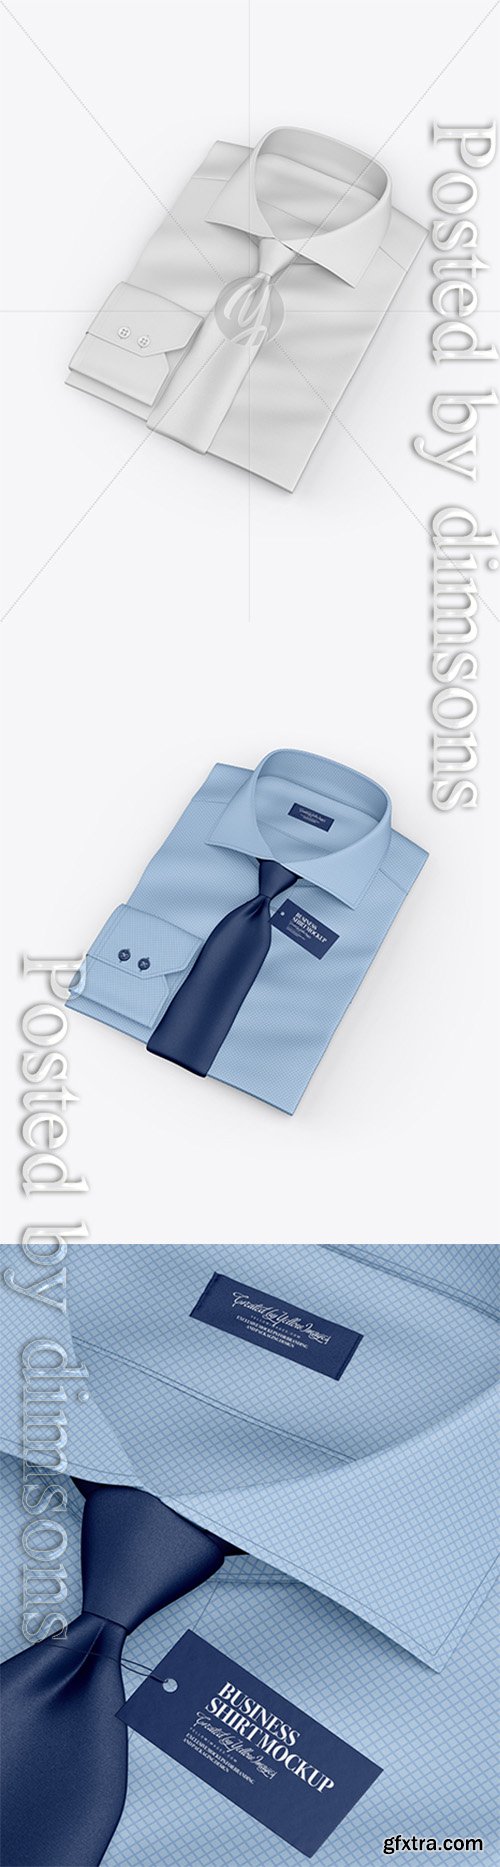 Folded Shirt With Tie Mockup - Half Side View (High-Angle Shot) 25072